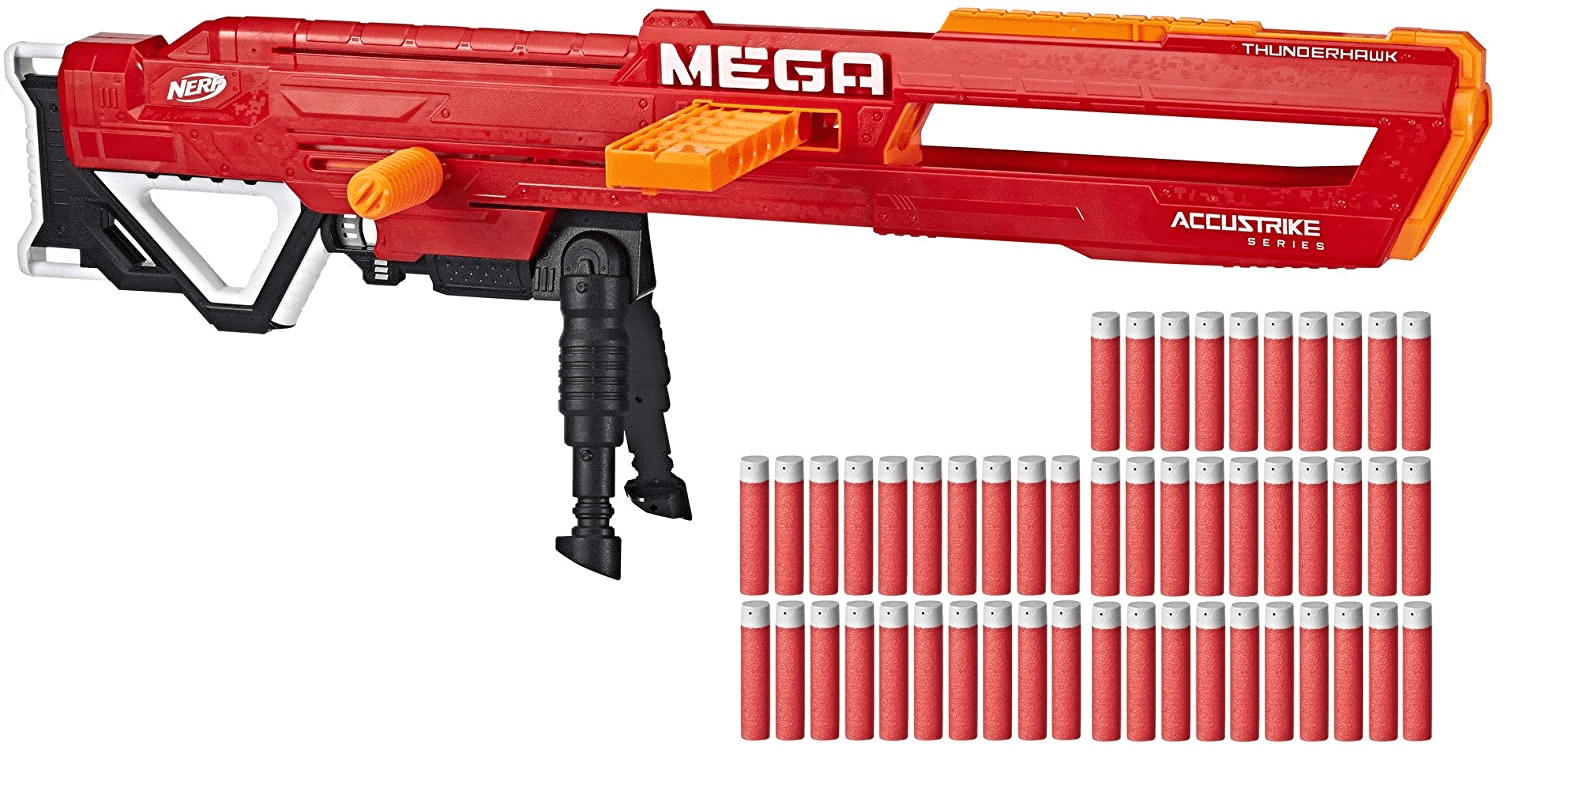 Nerf N-strike Mega Accustrike Thunderhawk Longest Darts Blaster Kids Toy Gun new 